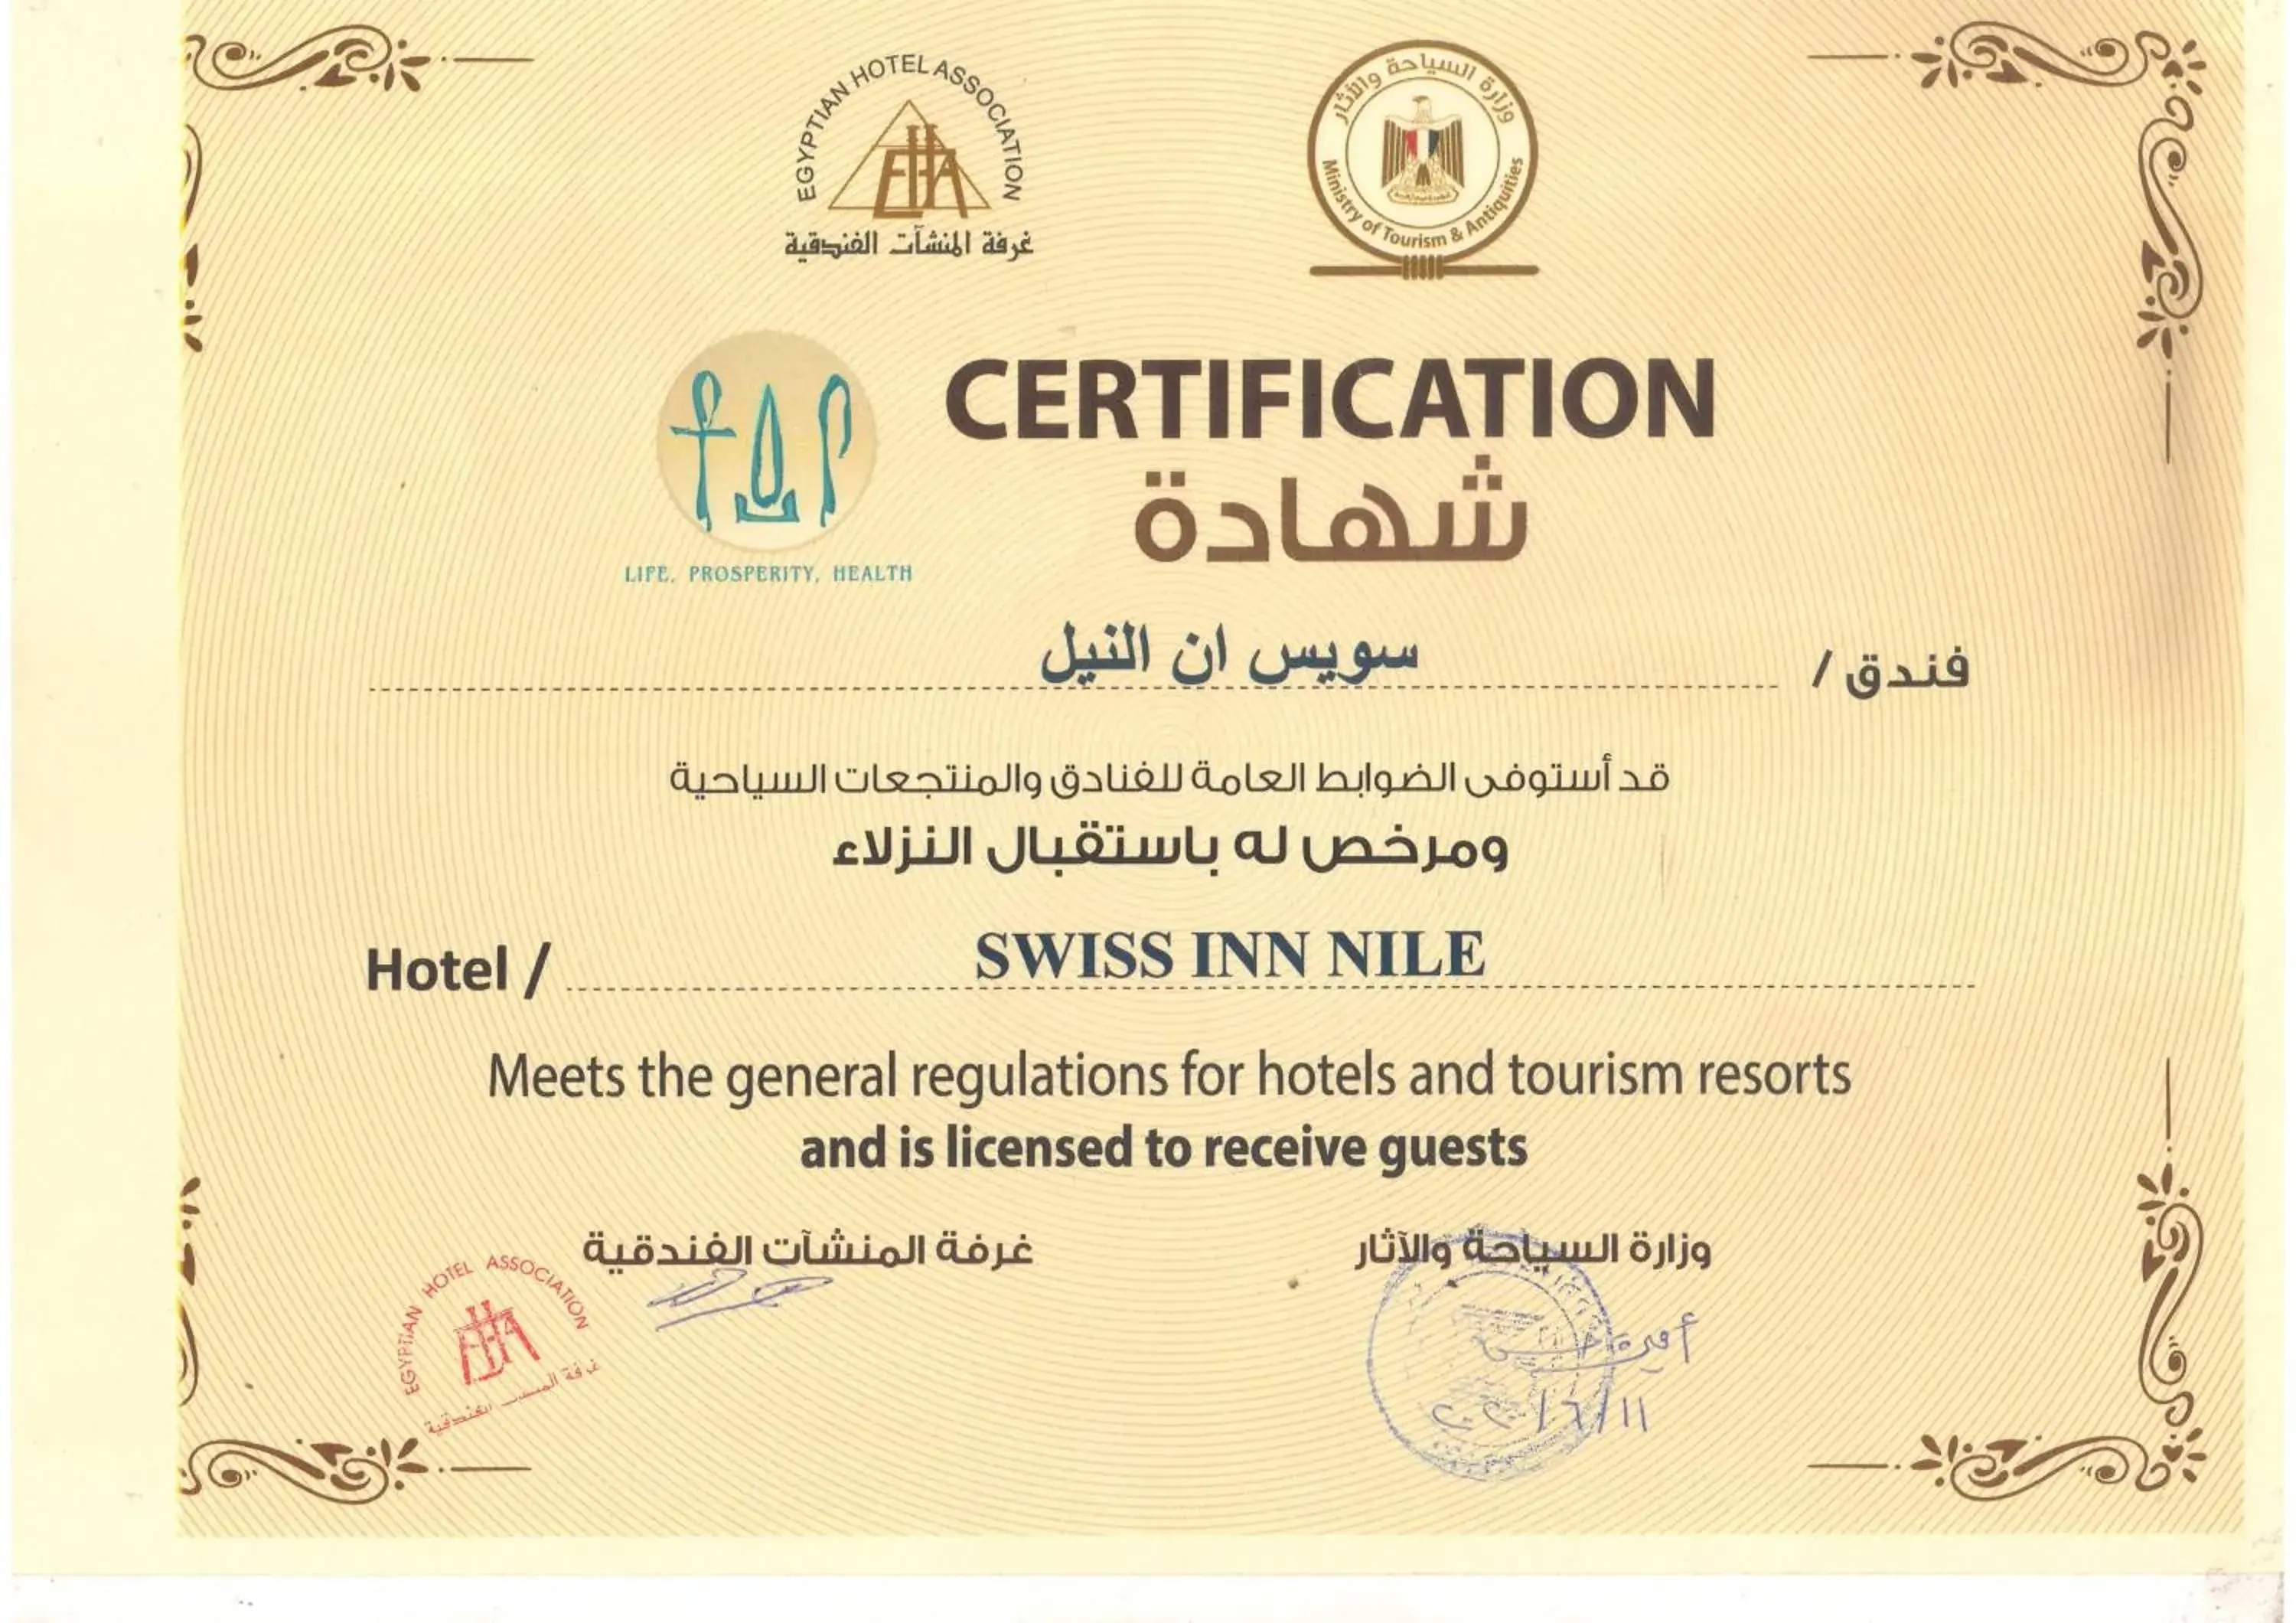 Certificate/Award in Swiss Inn Nile Hotel